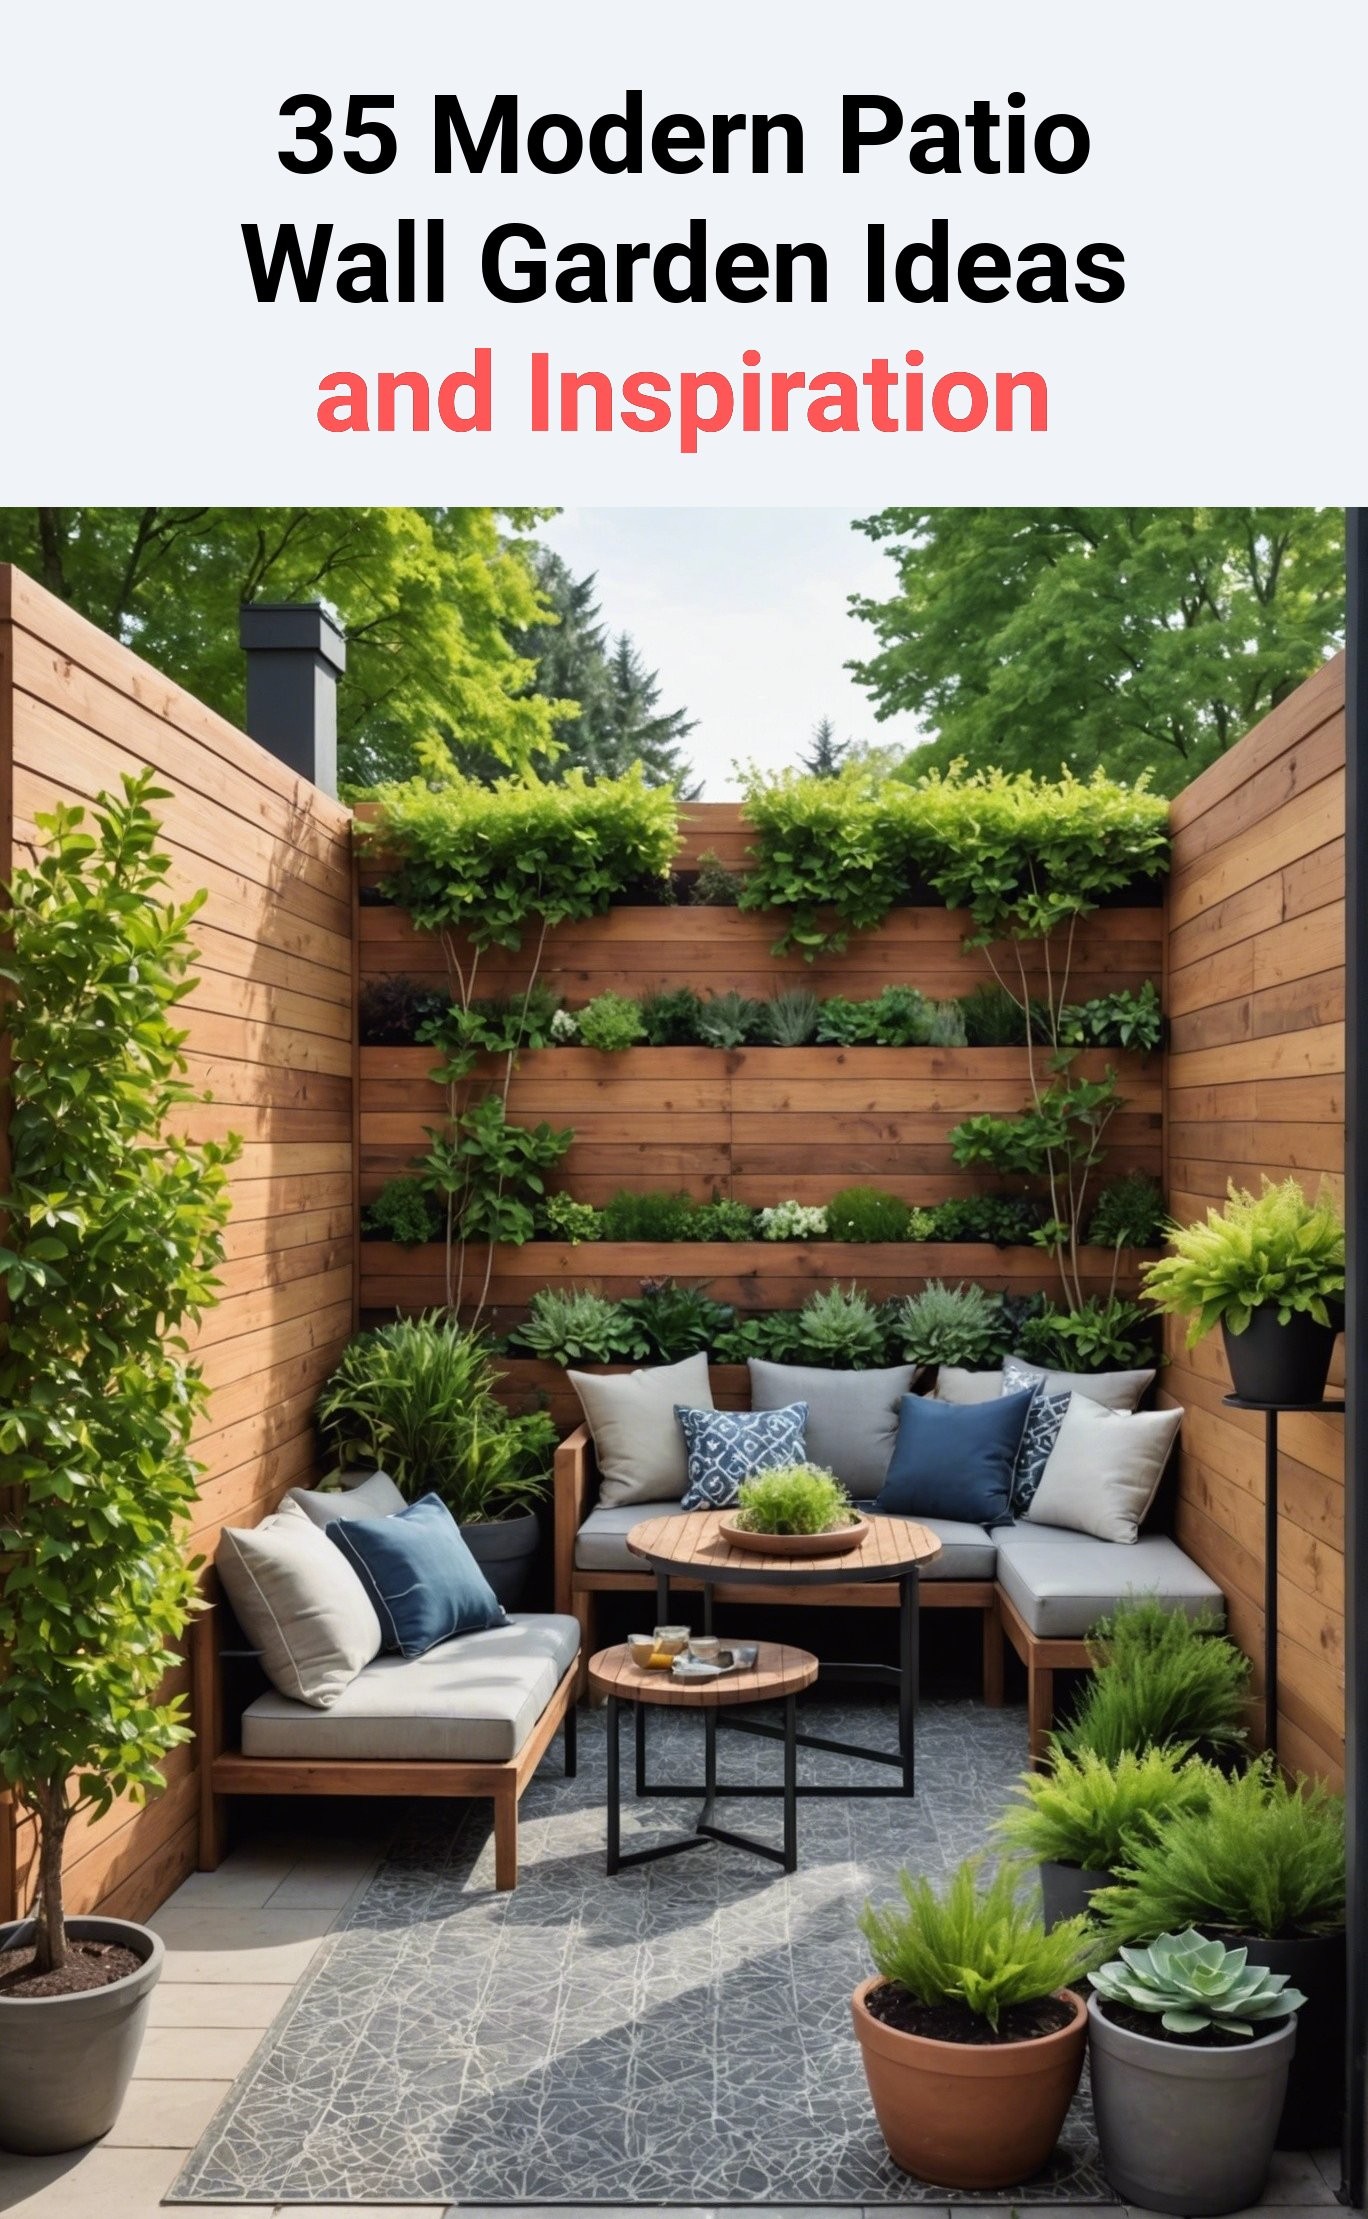 35 Modern Patio Wall Garden Ideas and Inspiration